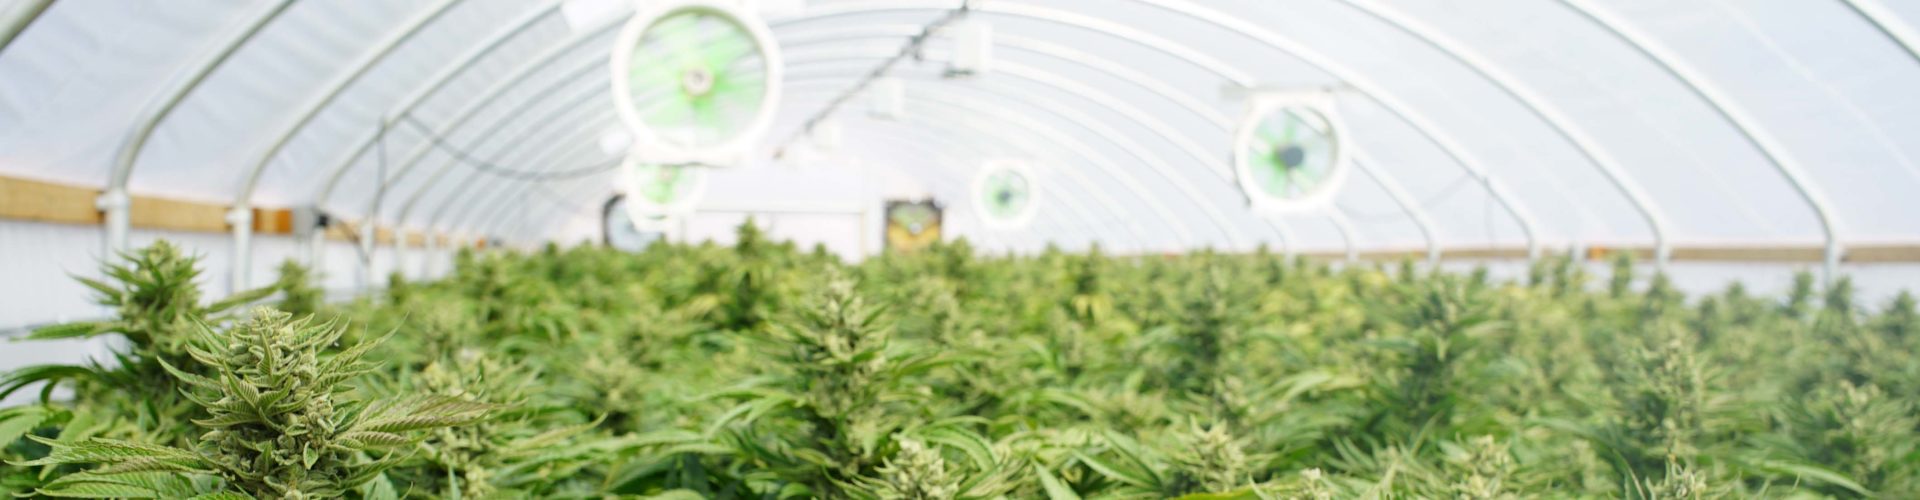 marijuana growing in a greenhouse